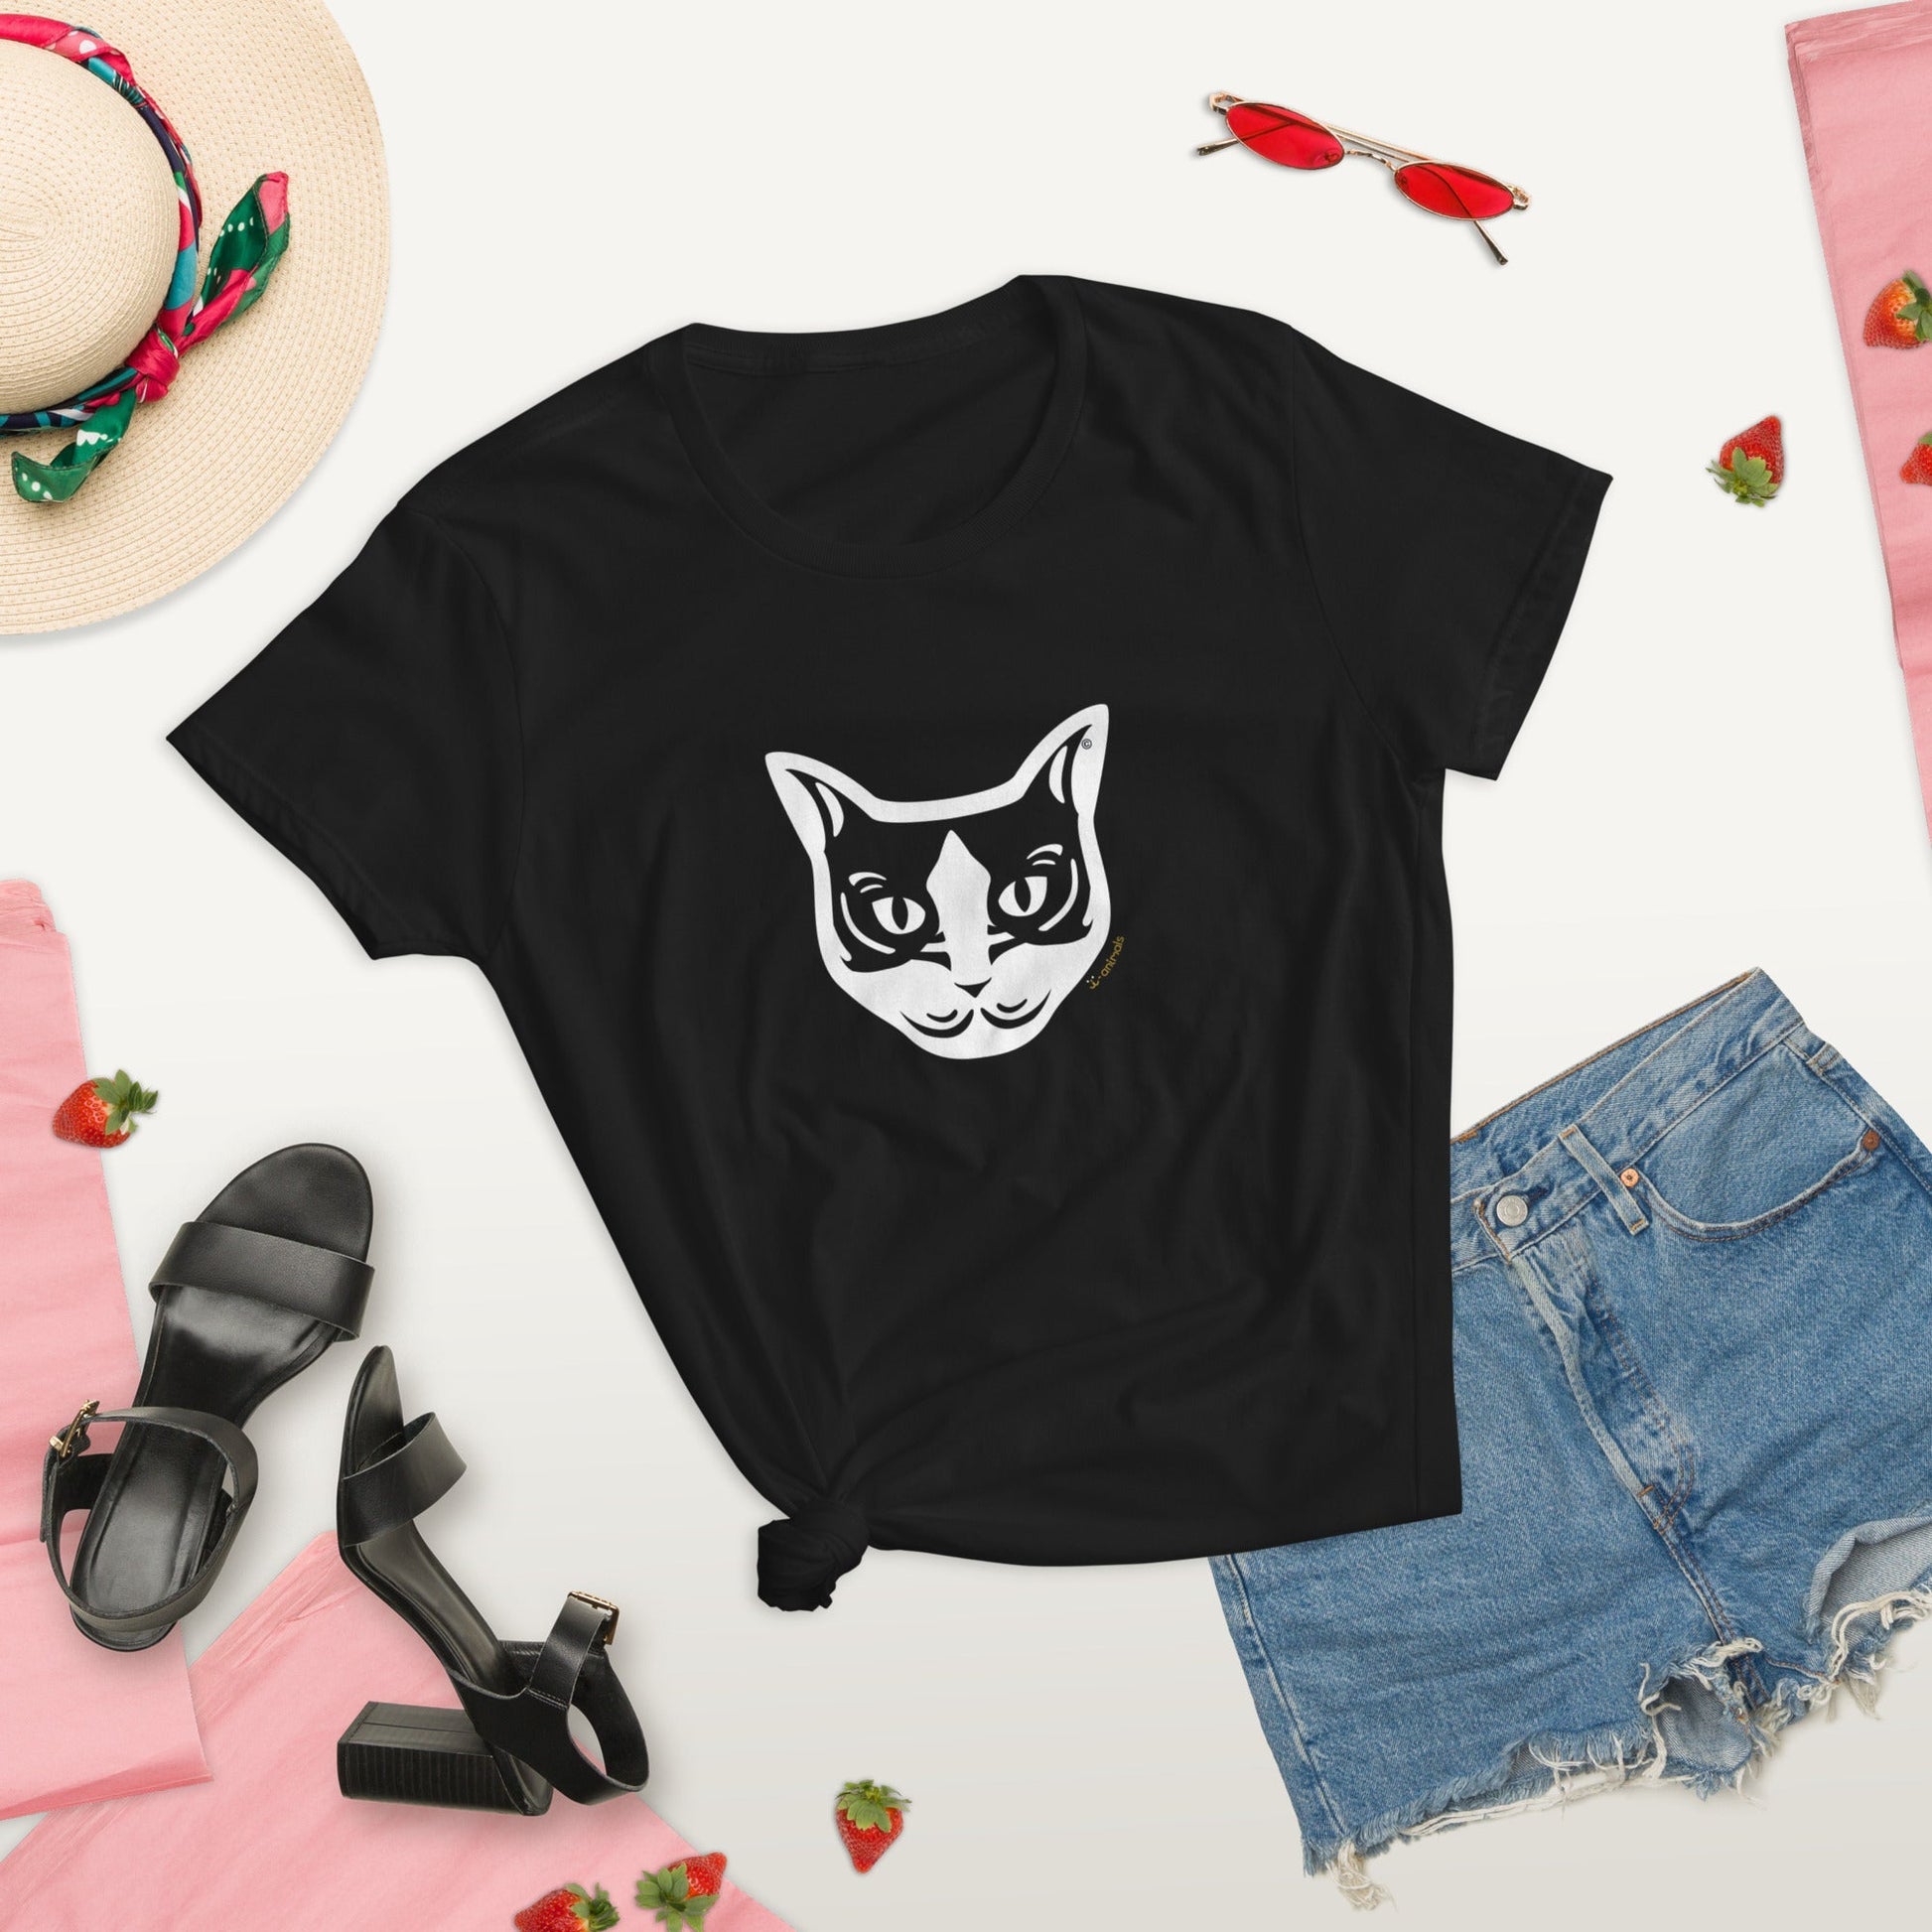 Camiseta feminina de manga curta - Gato preto e branco - Tribal i-animals